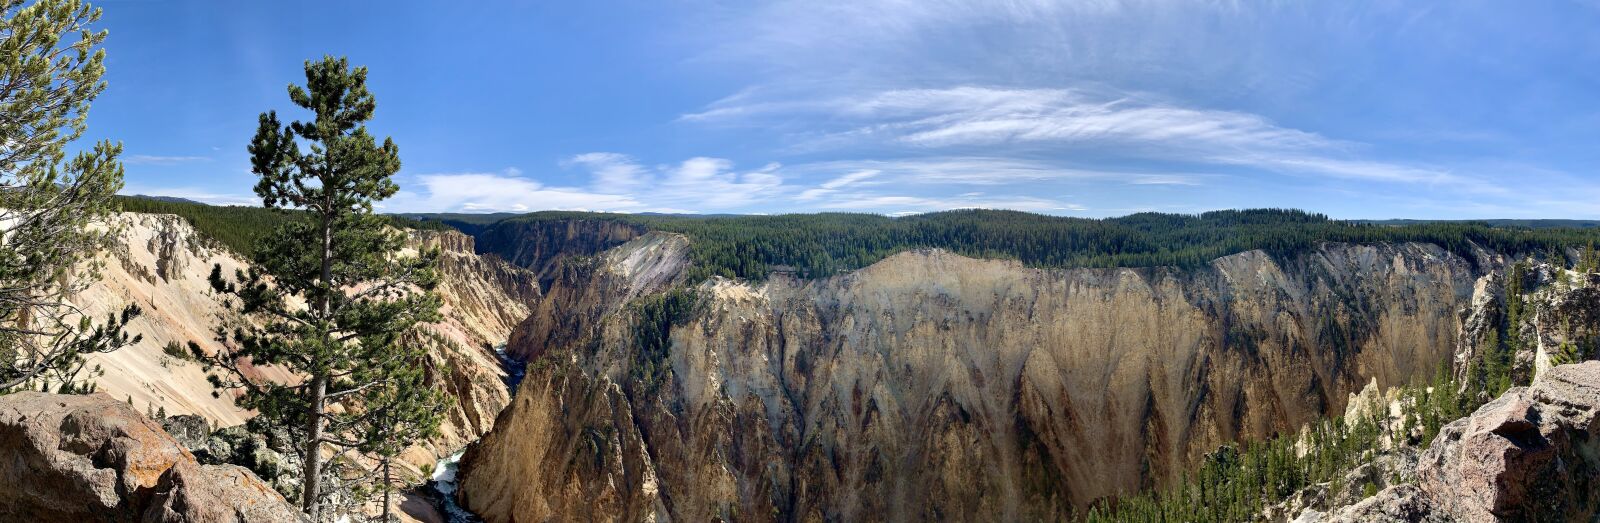 iPhone XS back camera 4.25mm f/1.8 sample photo. Yellowstone, wyoming, wilderness photography